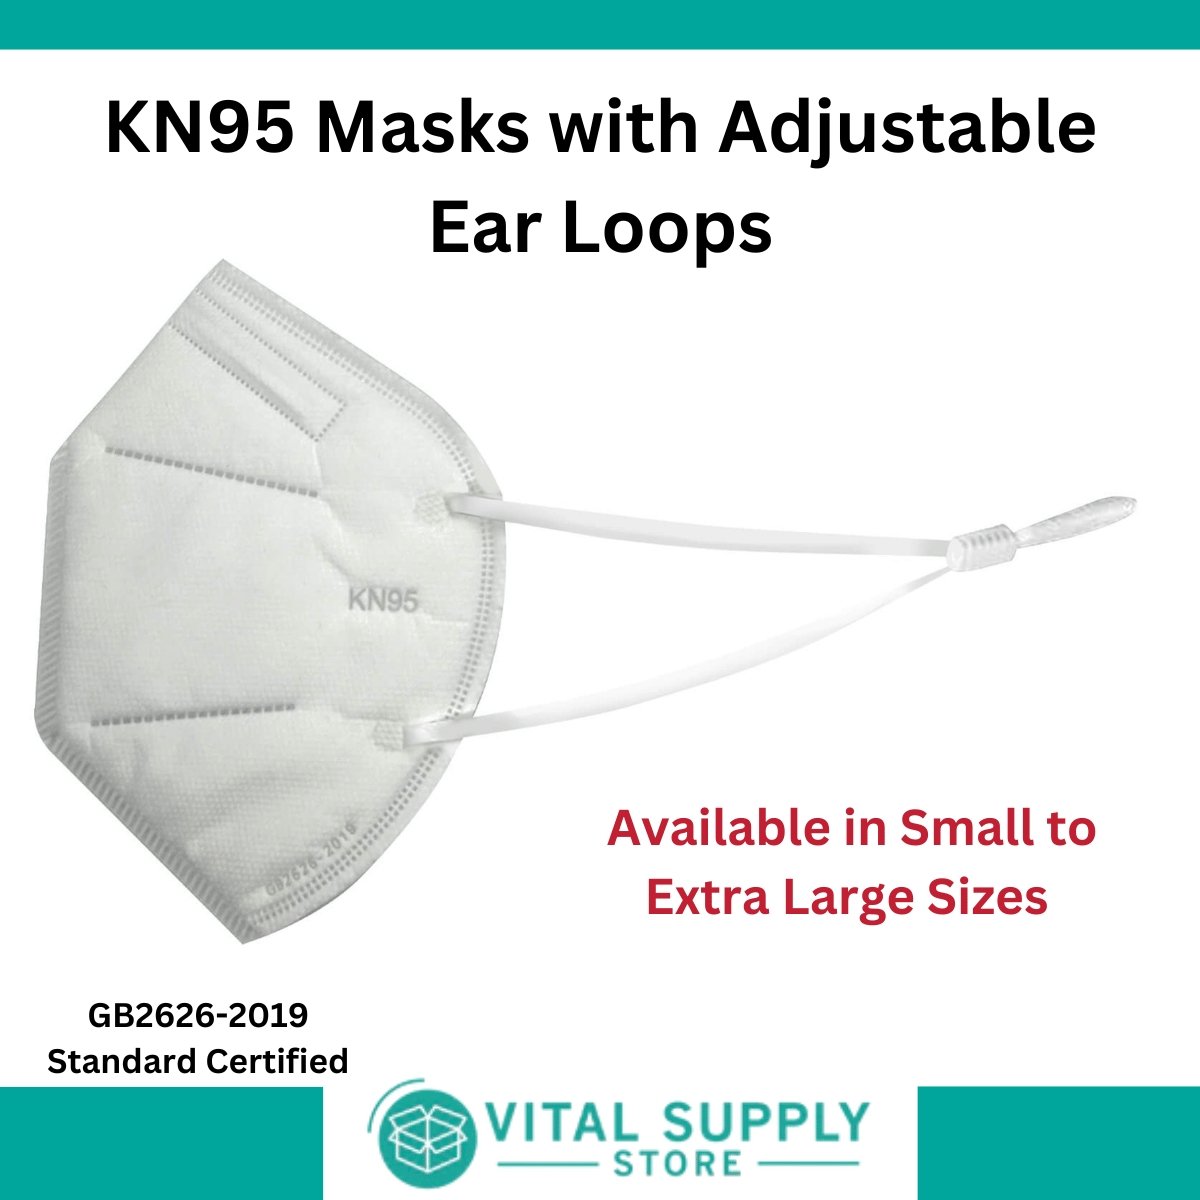 Sample Kit of KN95 Mask Sizes - Vital Supply Store